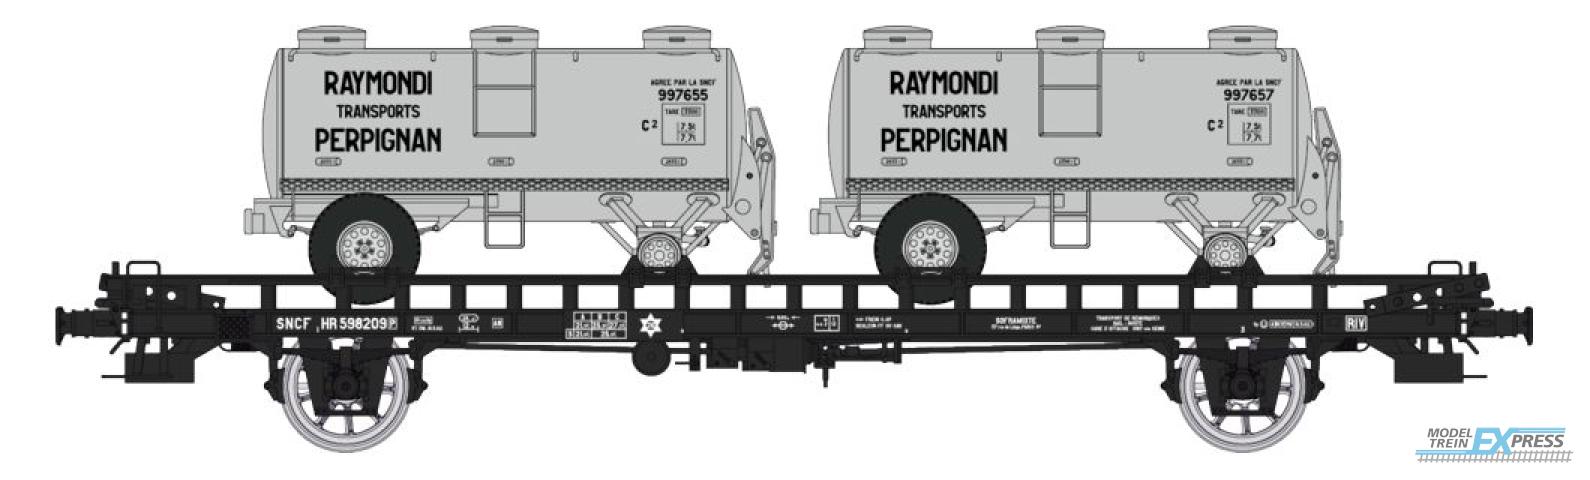 REE models WB-615 UFR double Era III HR 598209 black + 2 round shaped tank trailers RAYMONDI